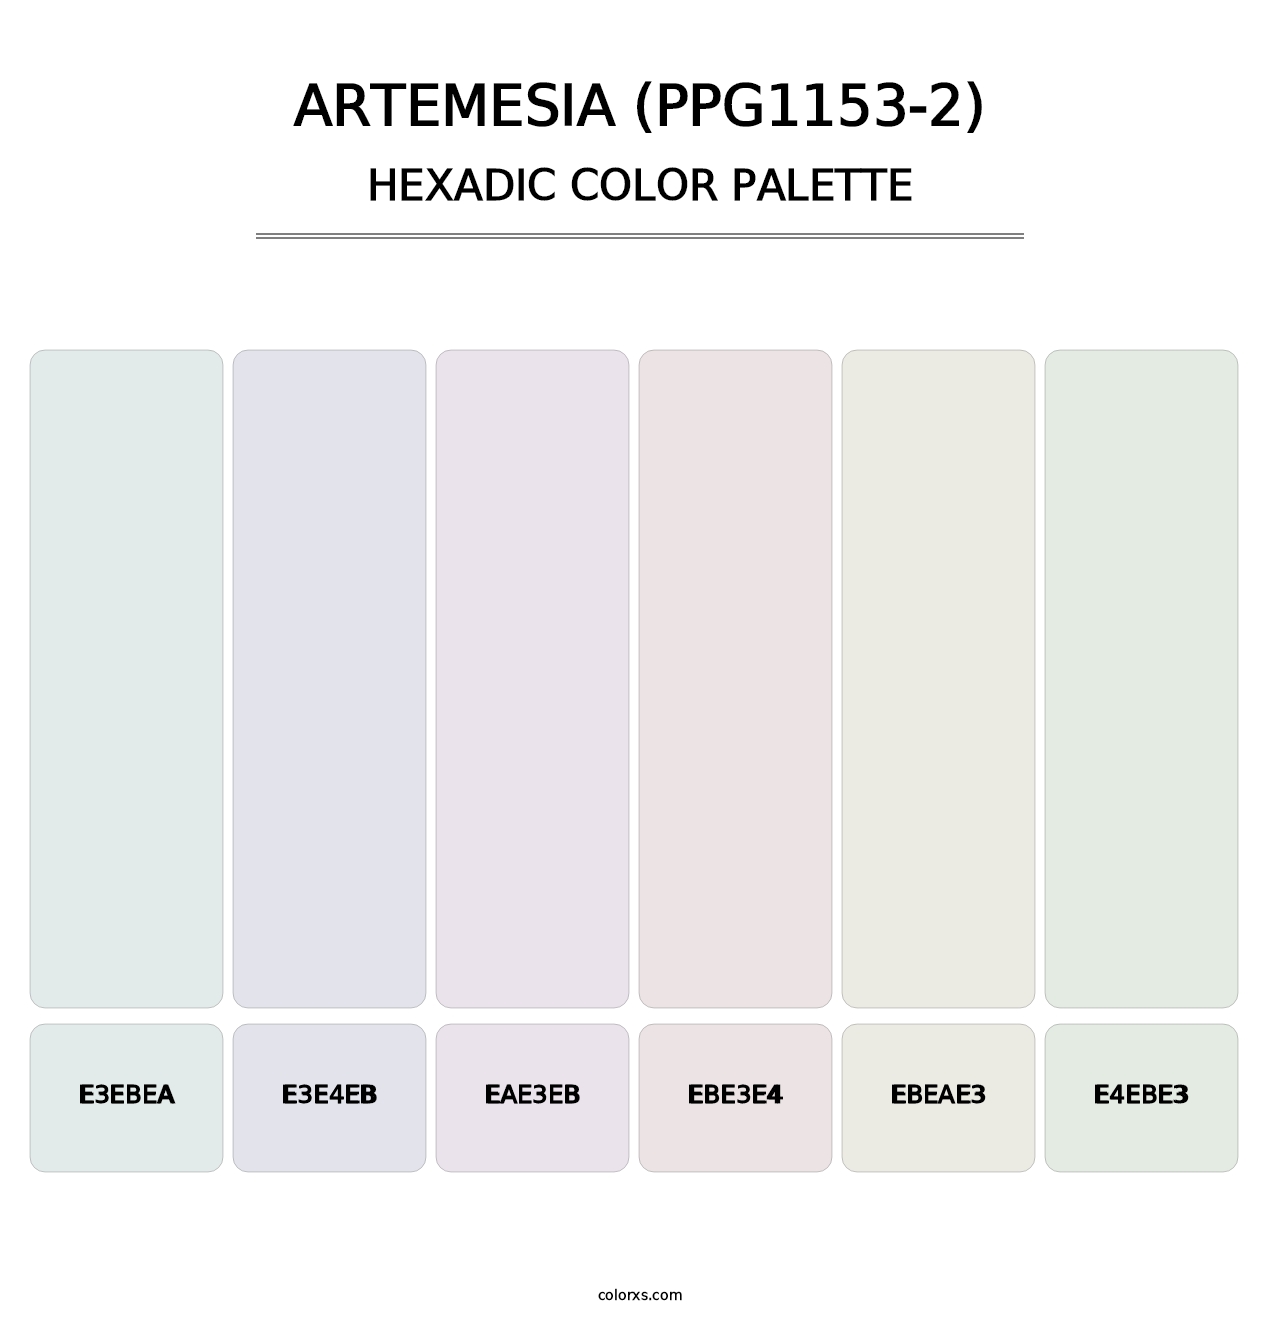 Artemesia (PPG1153-2) - Hexadic Color Palette